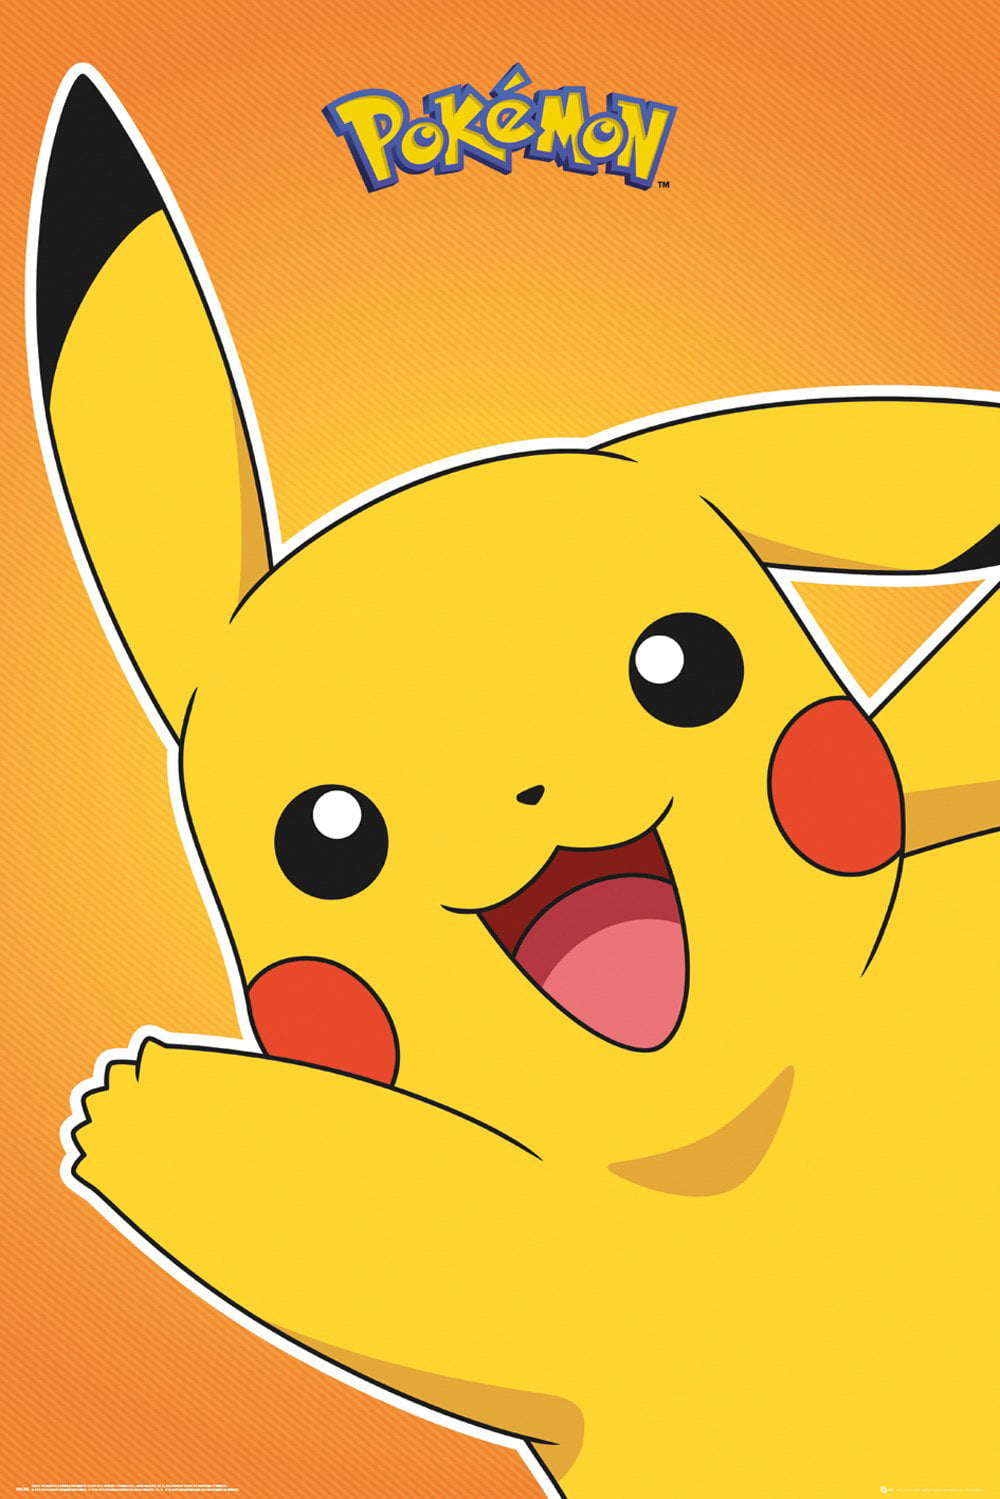 Pokemon - TV Show & Gaming Poster (Pikachu)